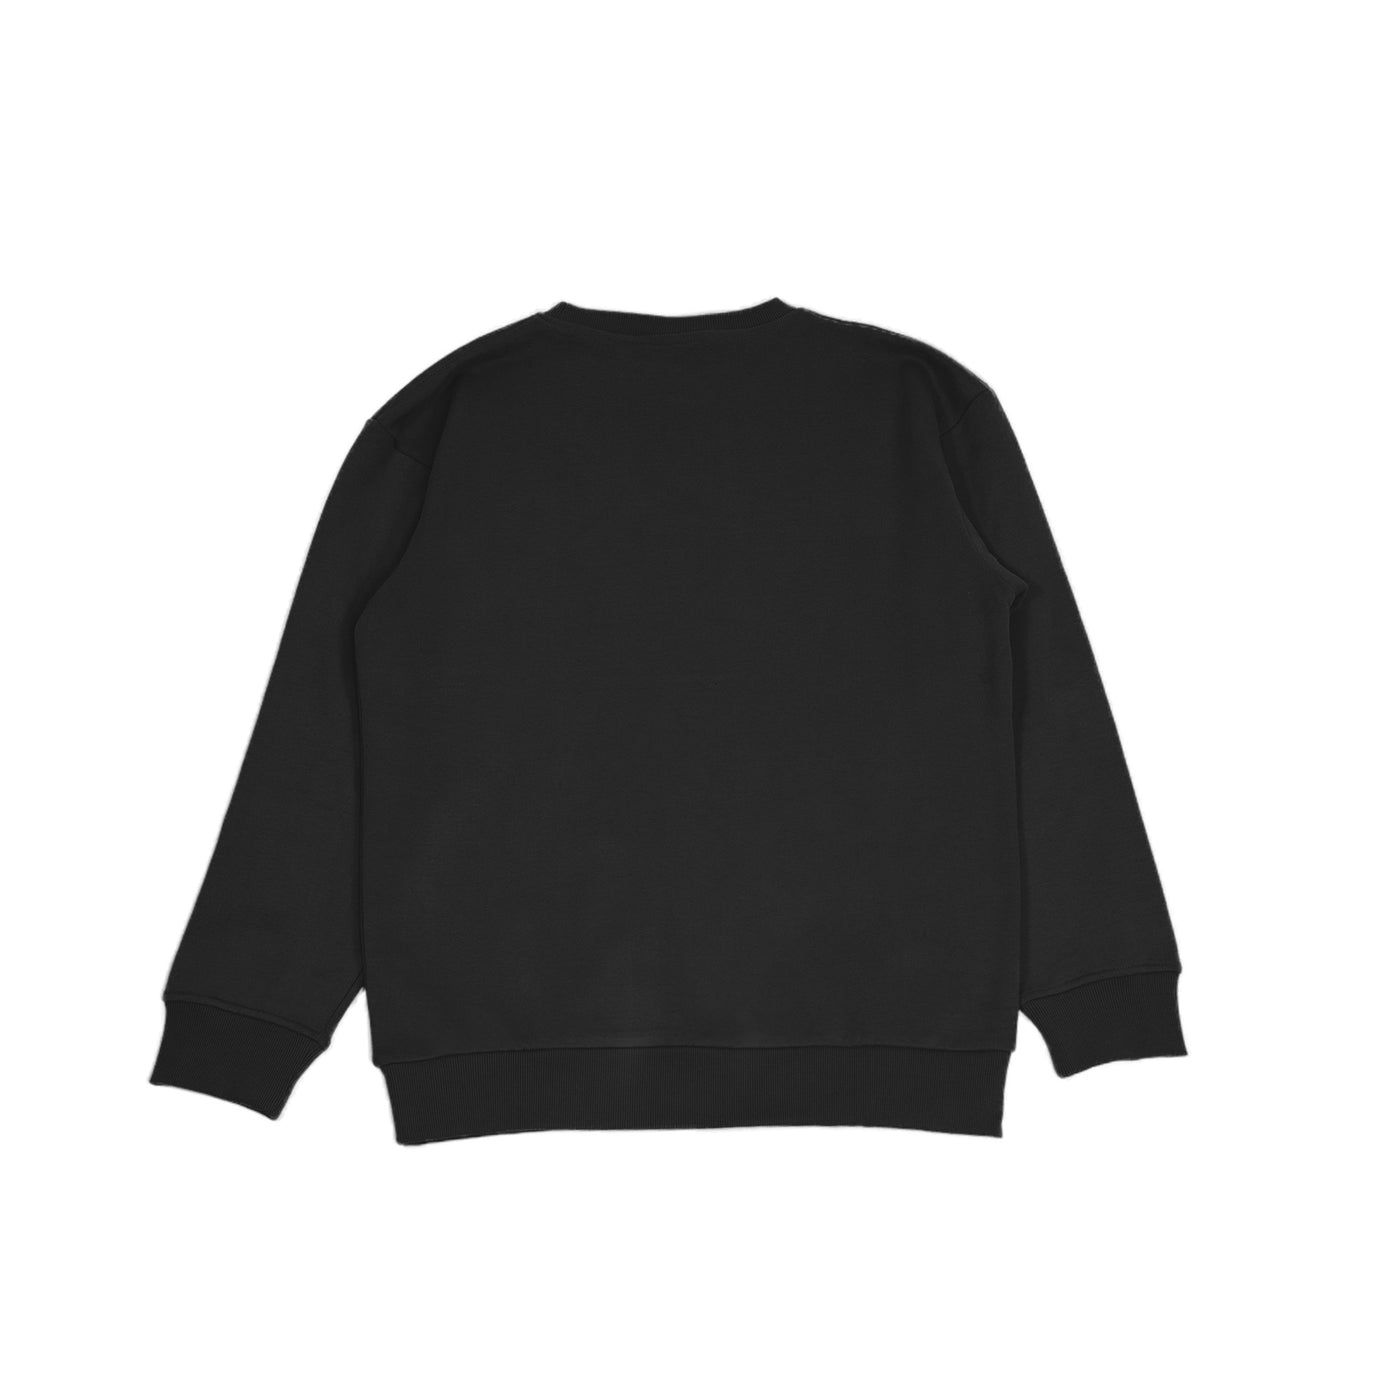 Essential Sweater Black